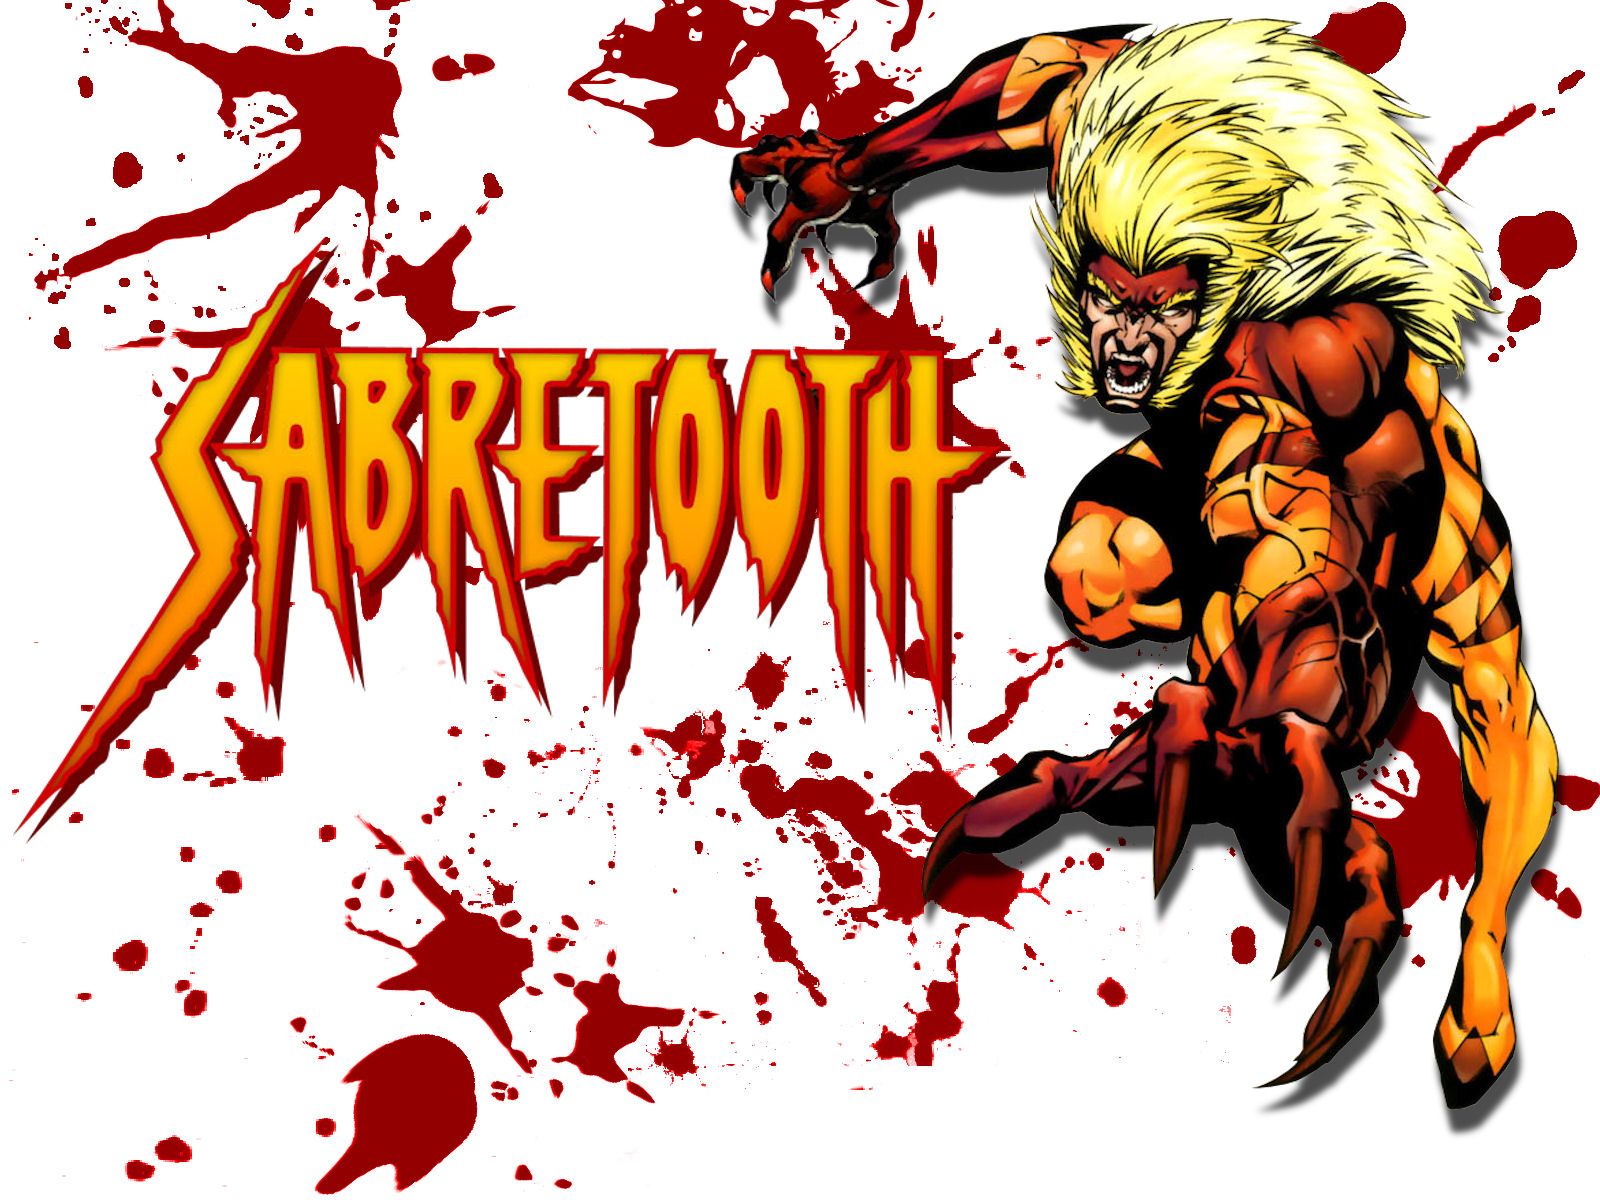 Sabretooth Wallpaper. Sabretooth Wallpaper, Marvel Sabretooth Wallpaper and Liev Schreiber Sabretooth Wallpaper